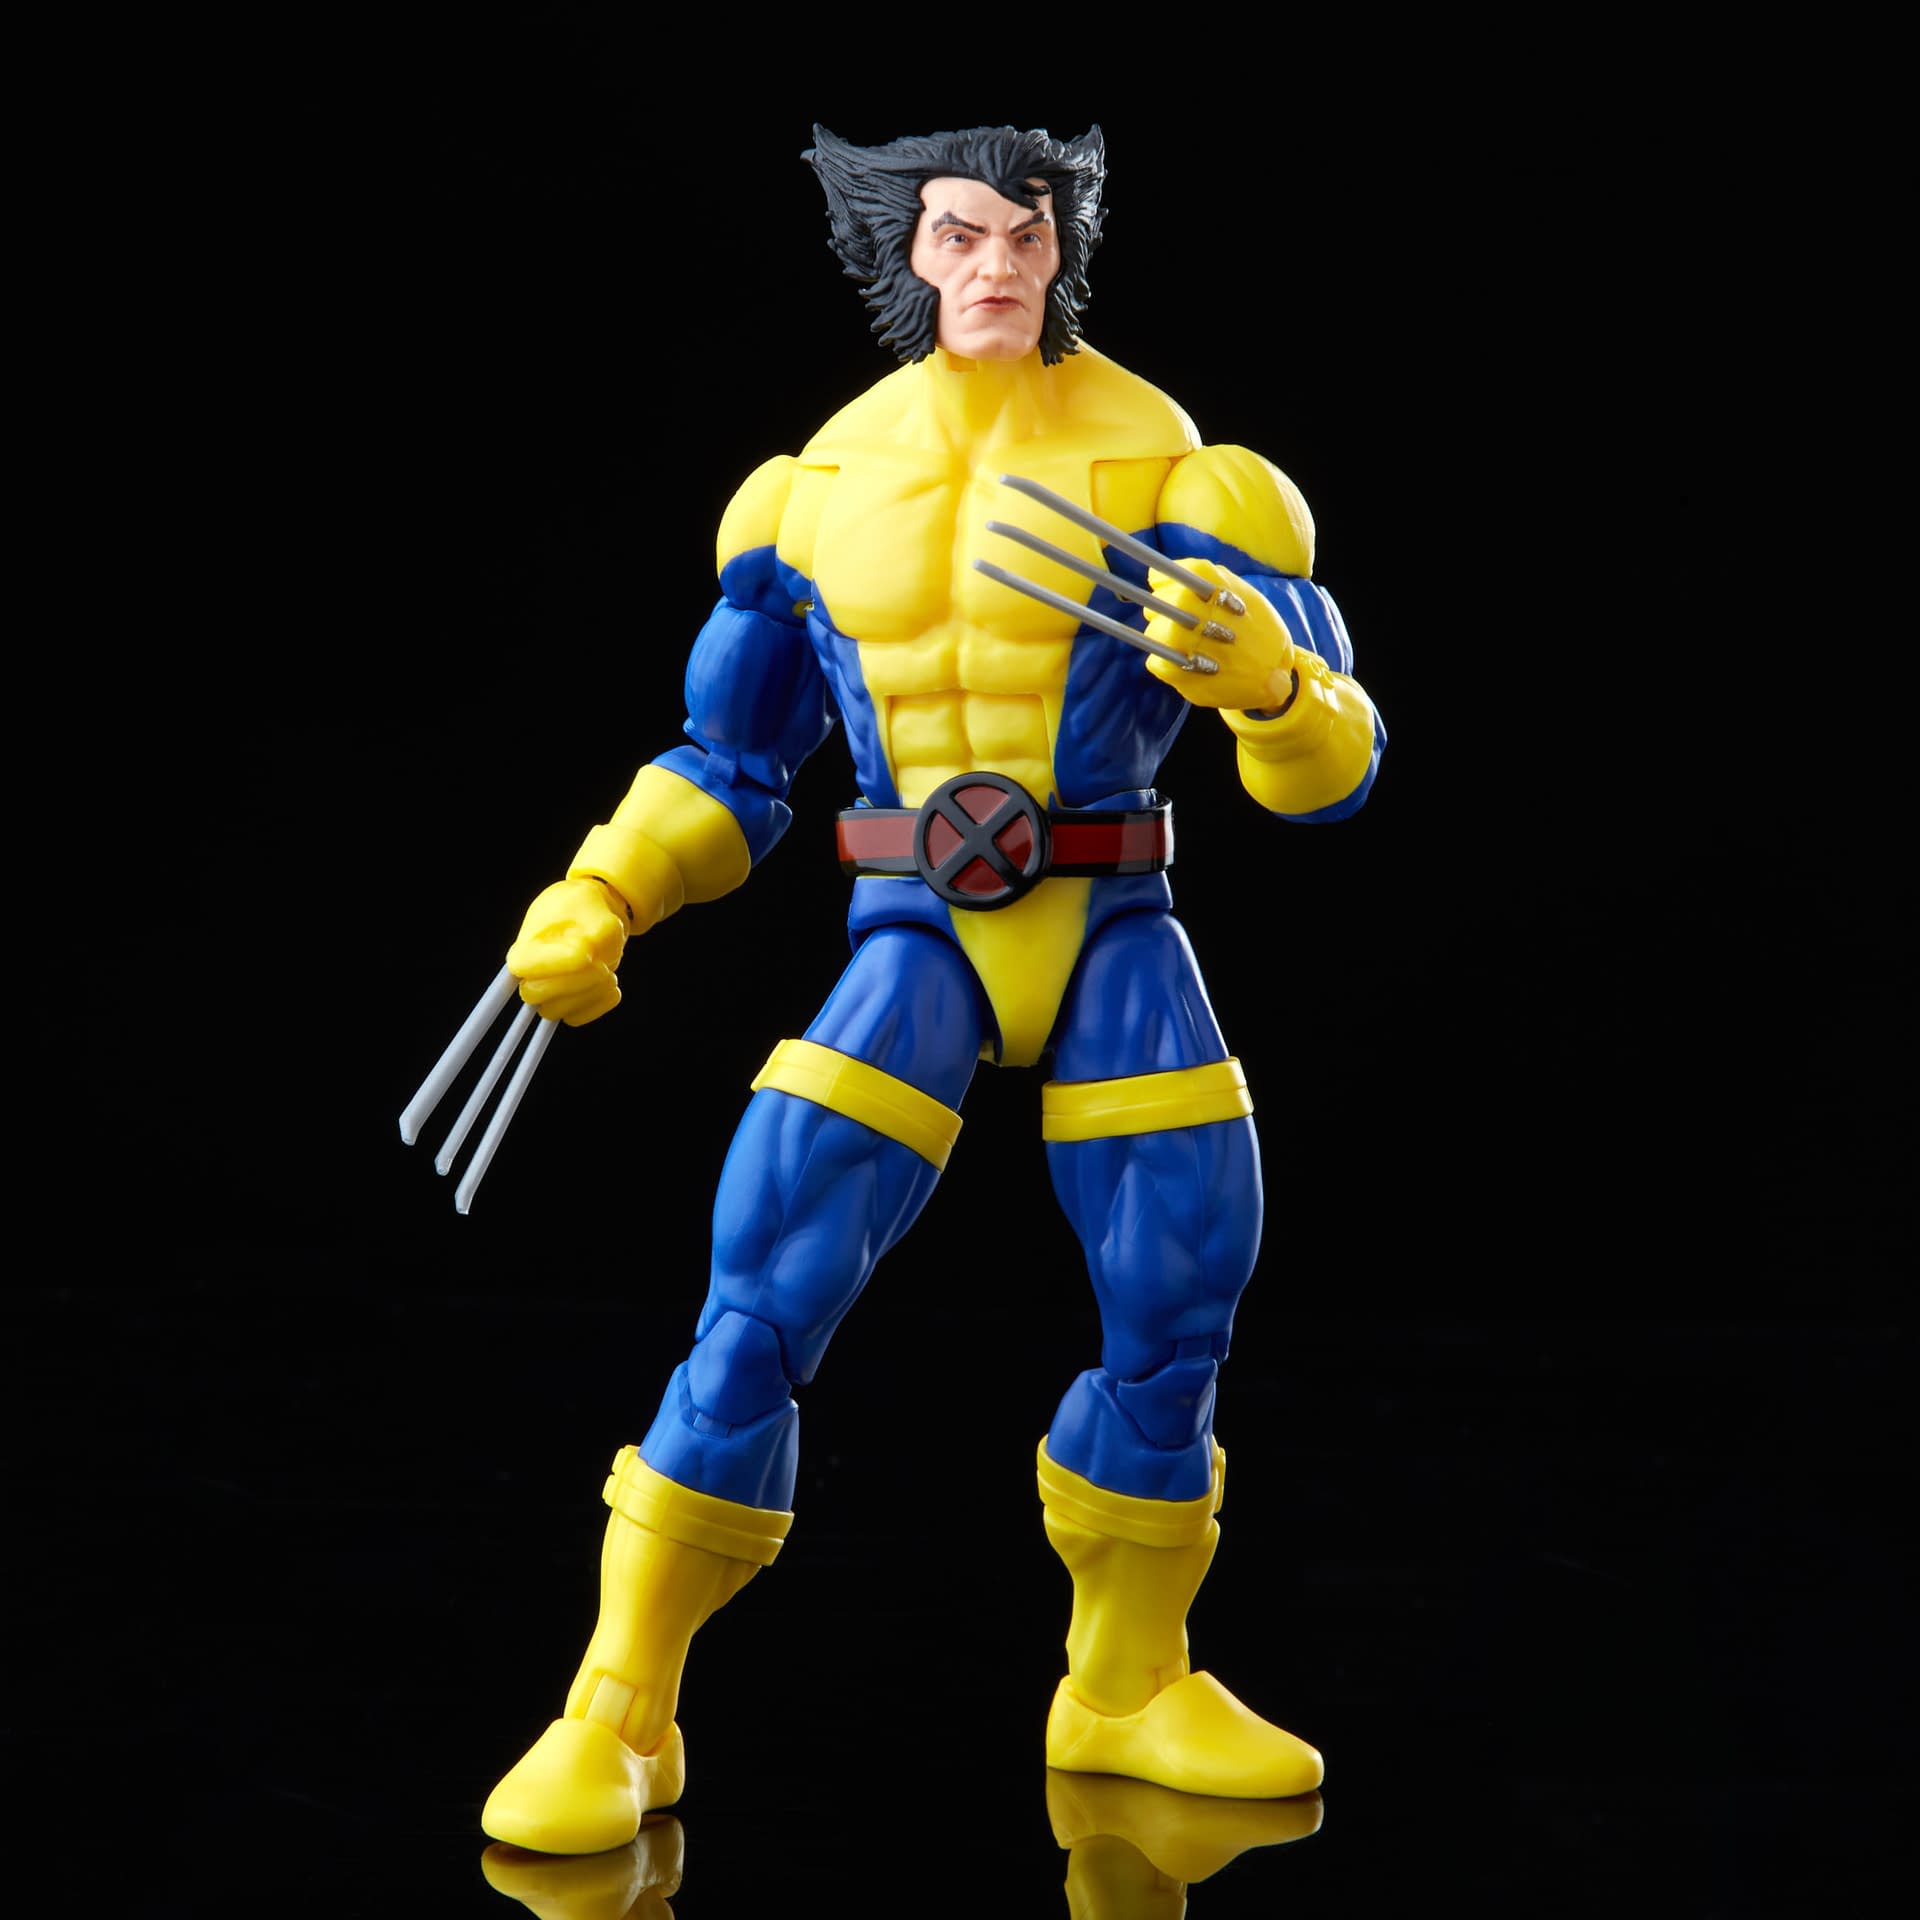 X-Men Team Uniform Marvel Legends Figures are Coming Soon